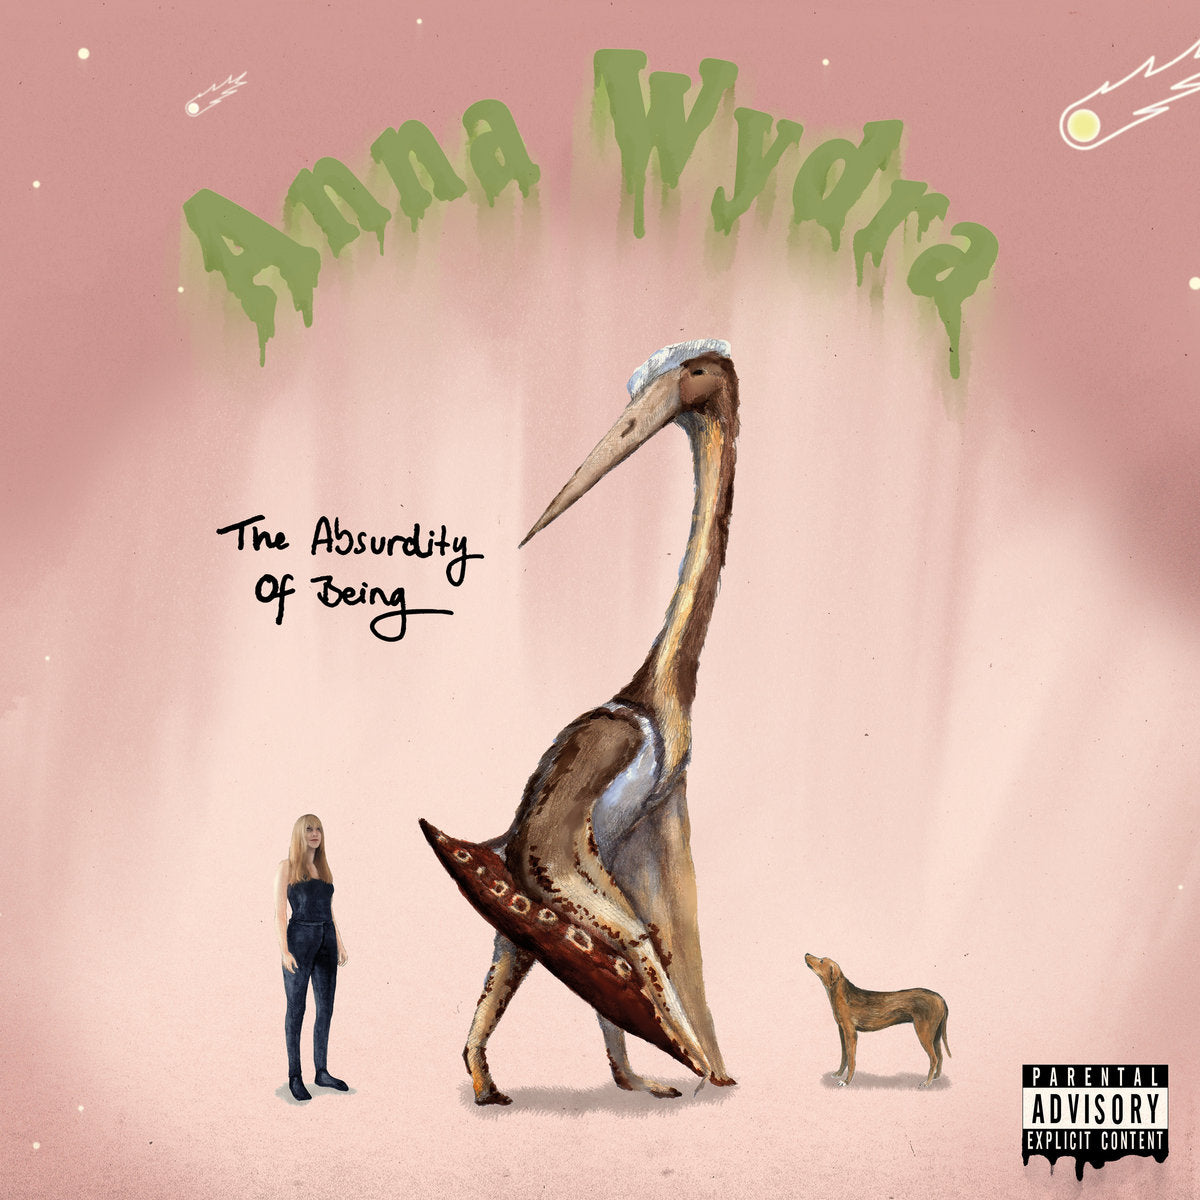 Anna Wydra - The Absurdity of Being